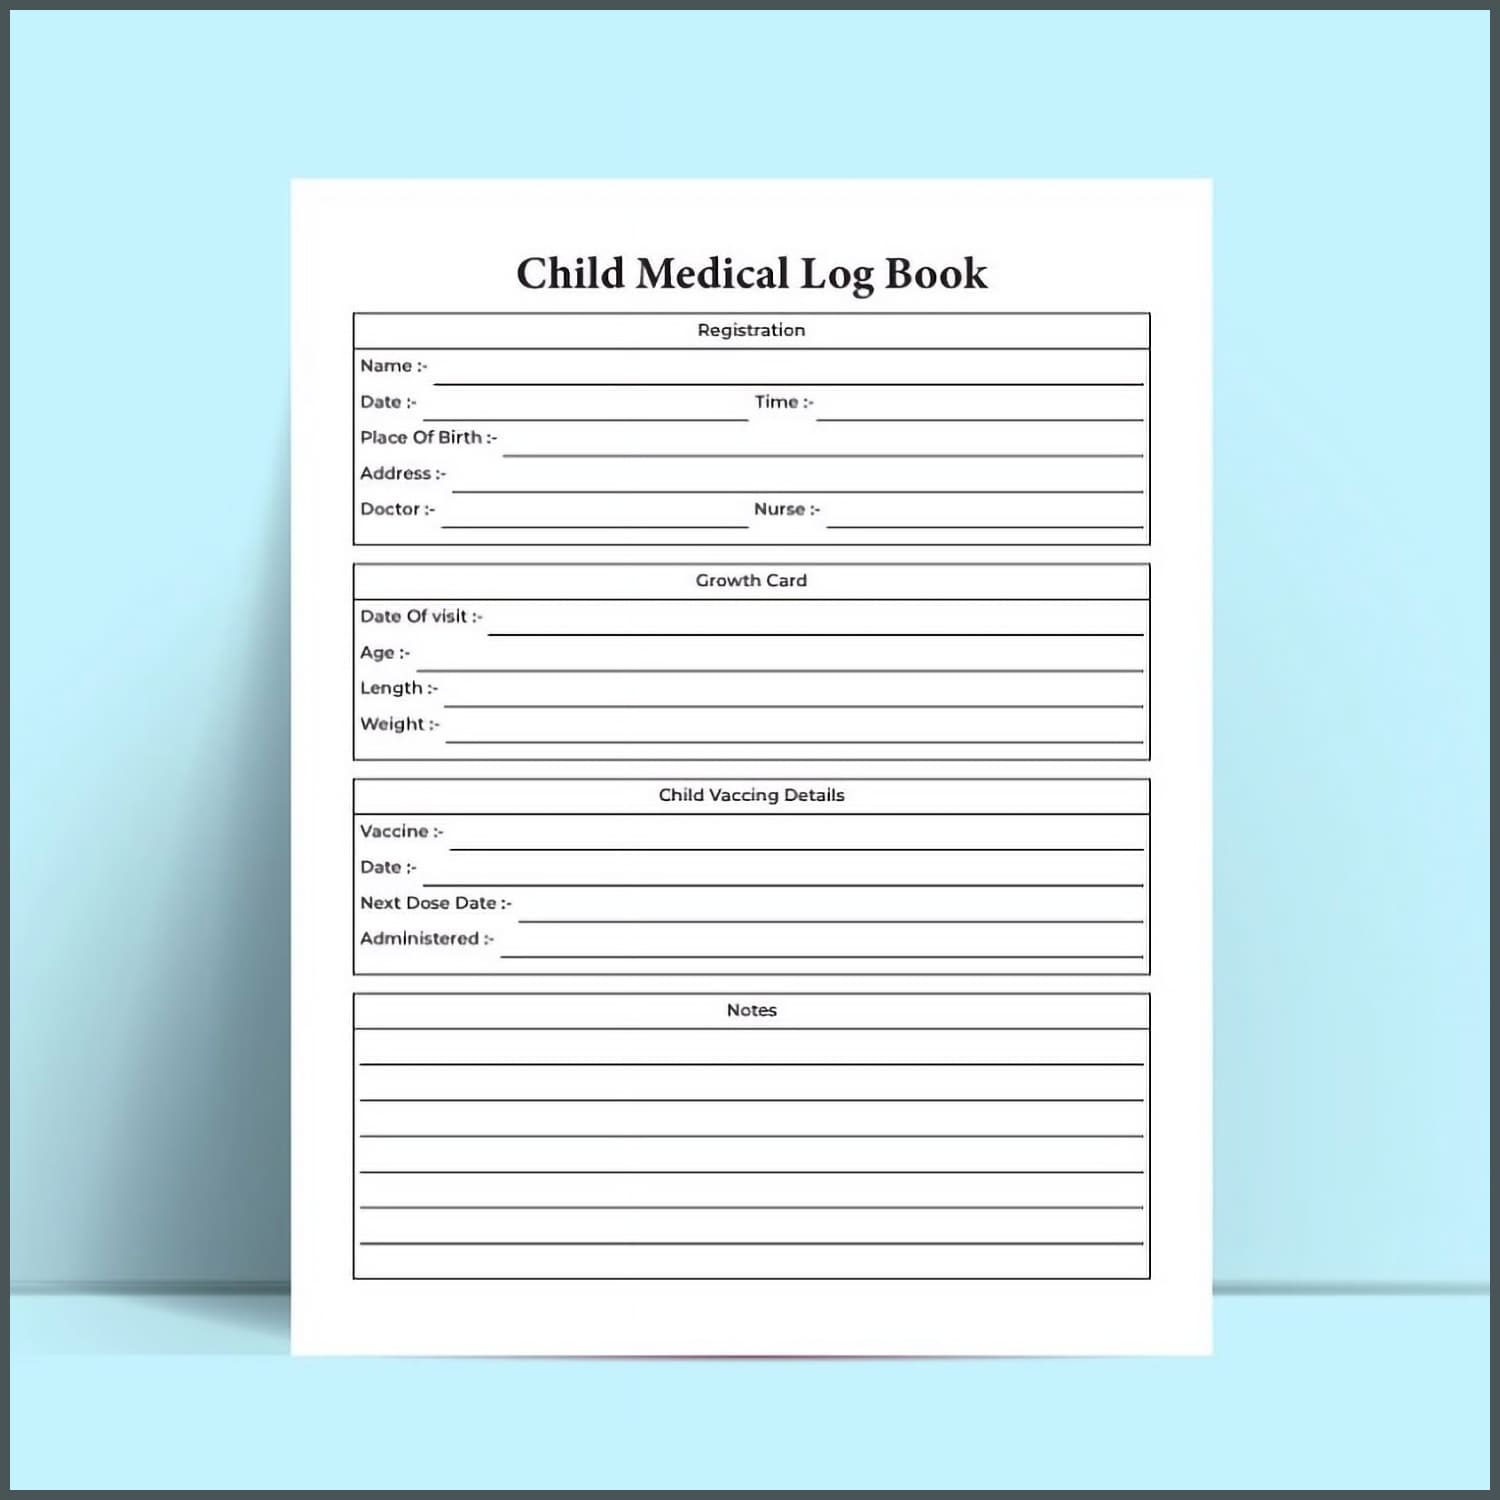 Child medical log book KDP interior from Iftikhar Alam.